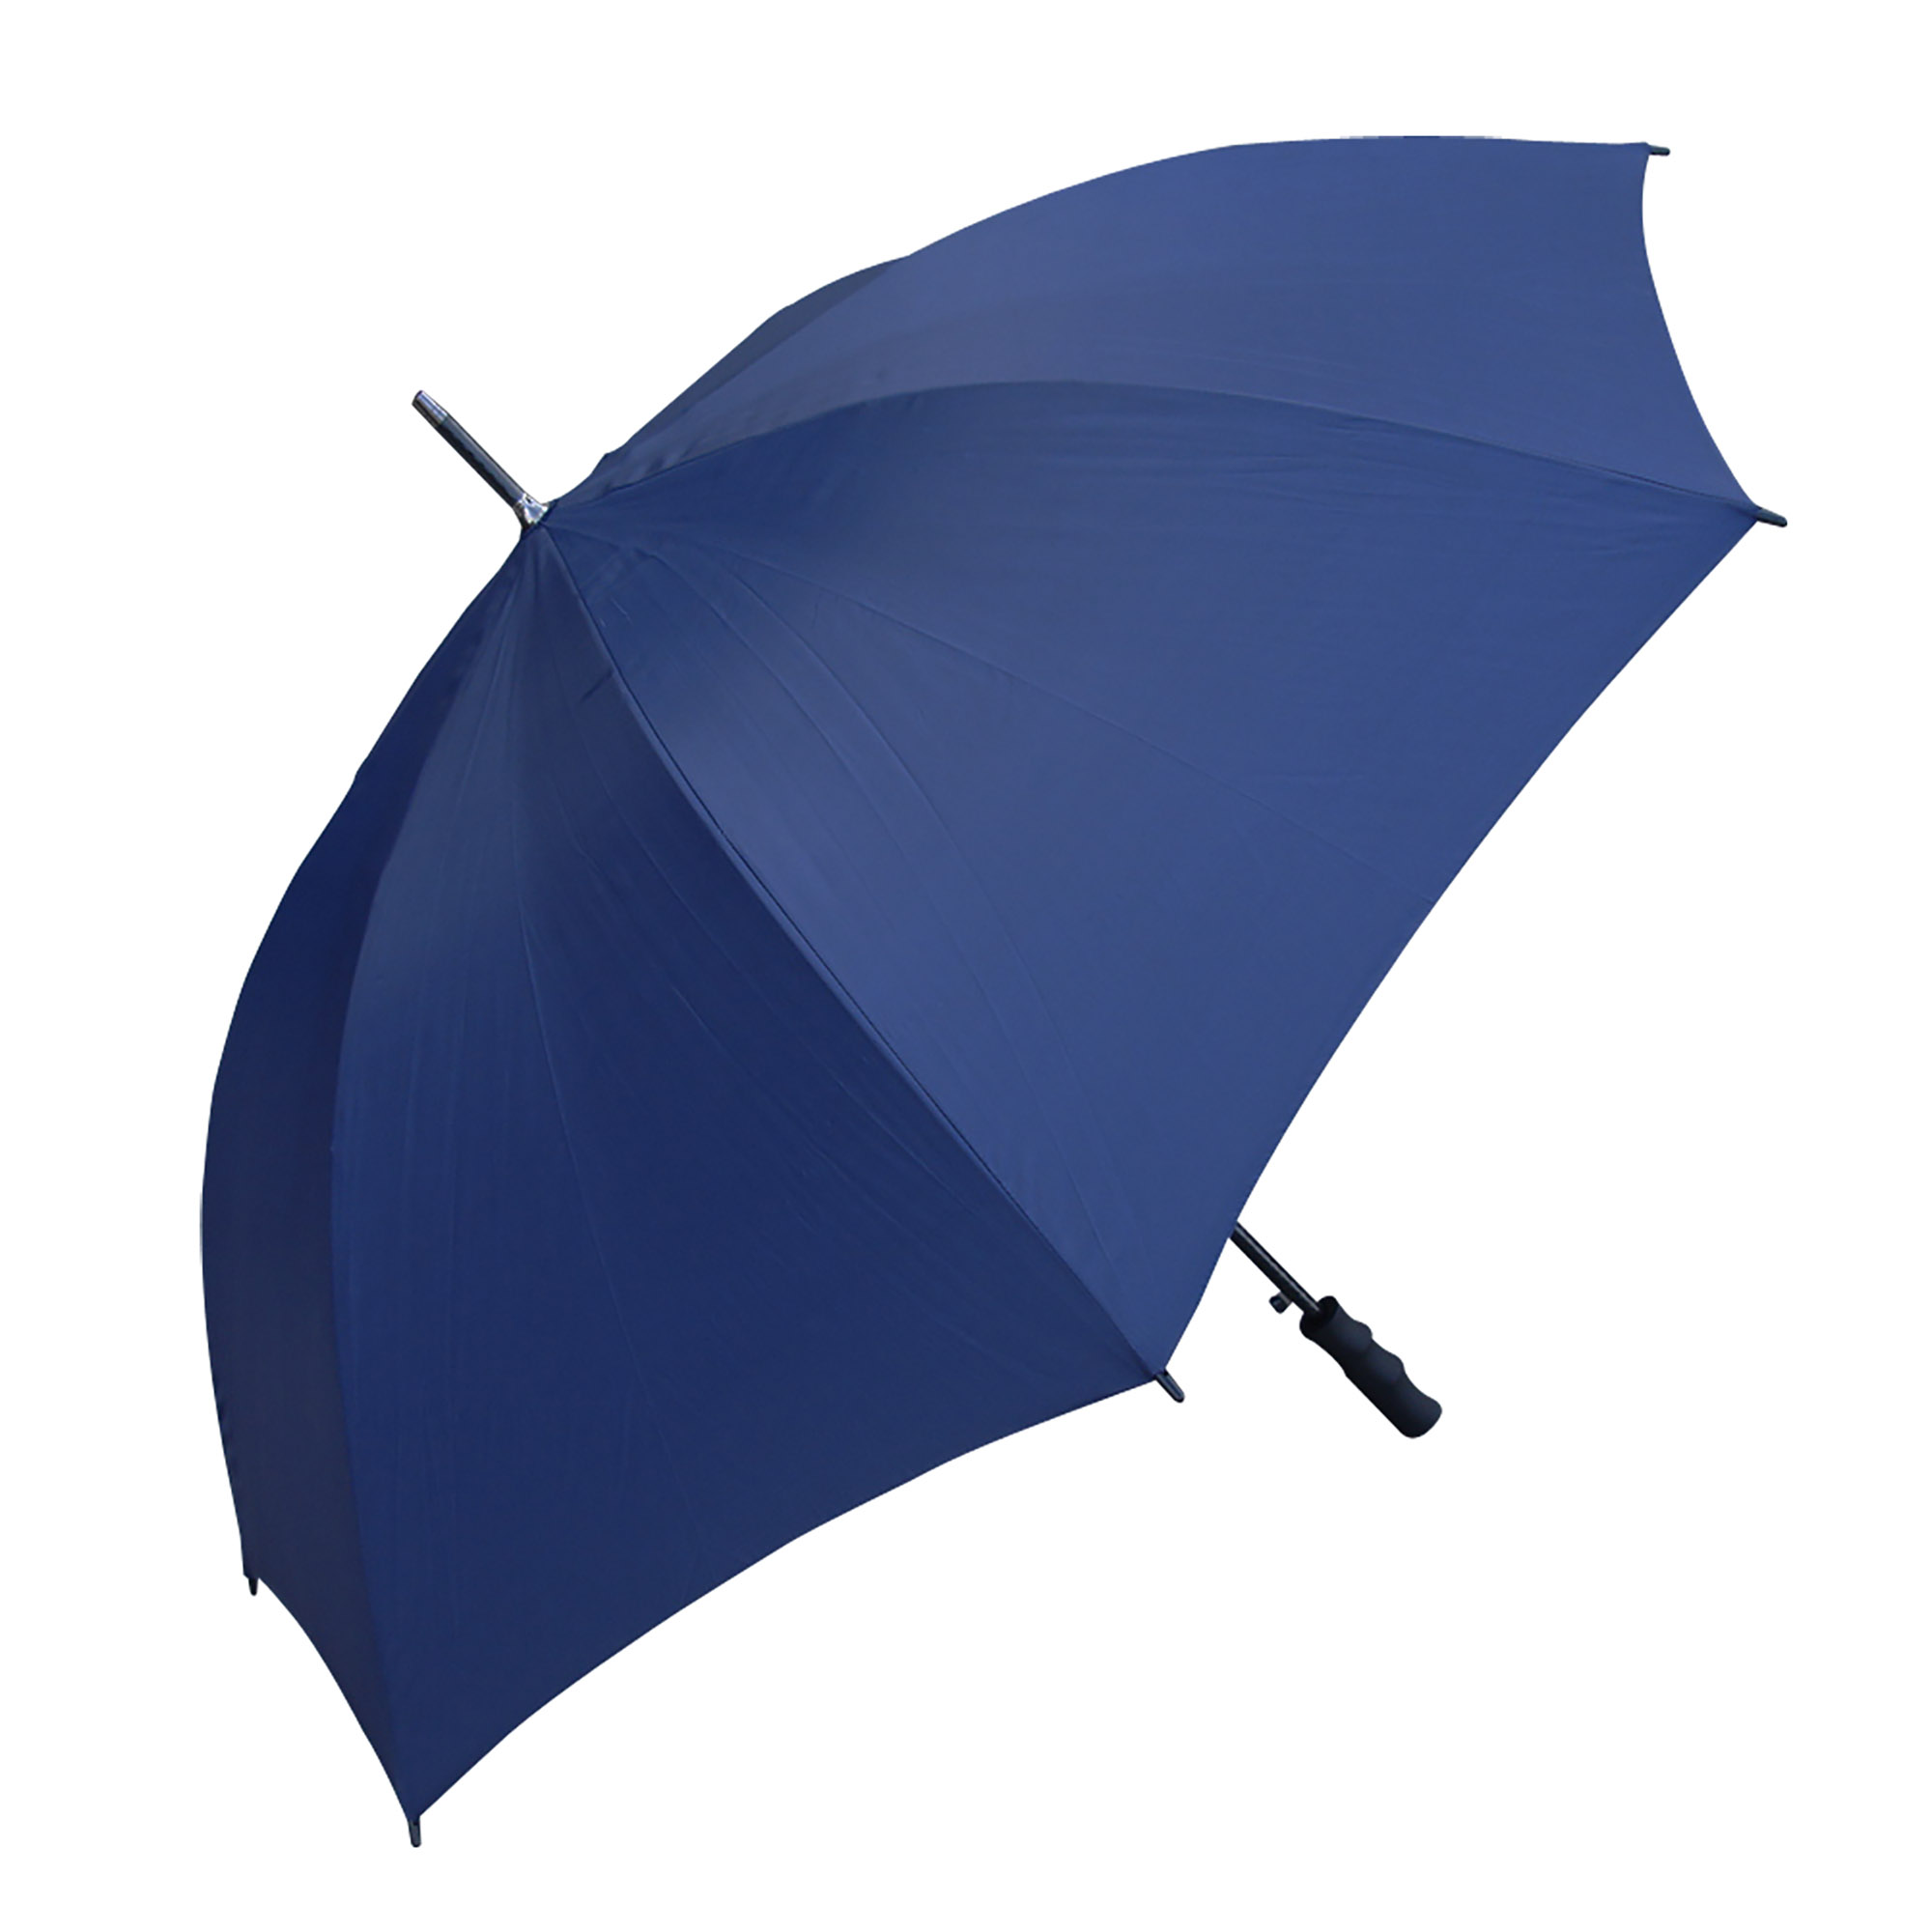 Bulk Promotional Royal Blue Sands Umbrella Online In Perth Australia